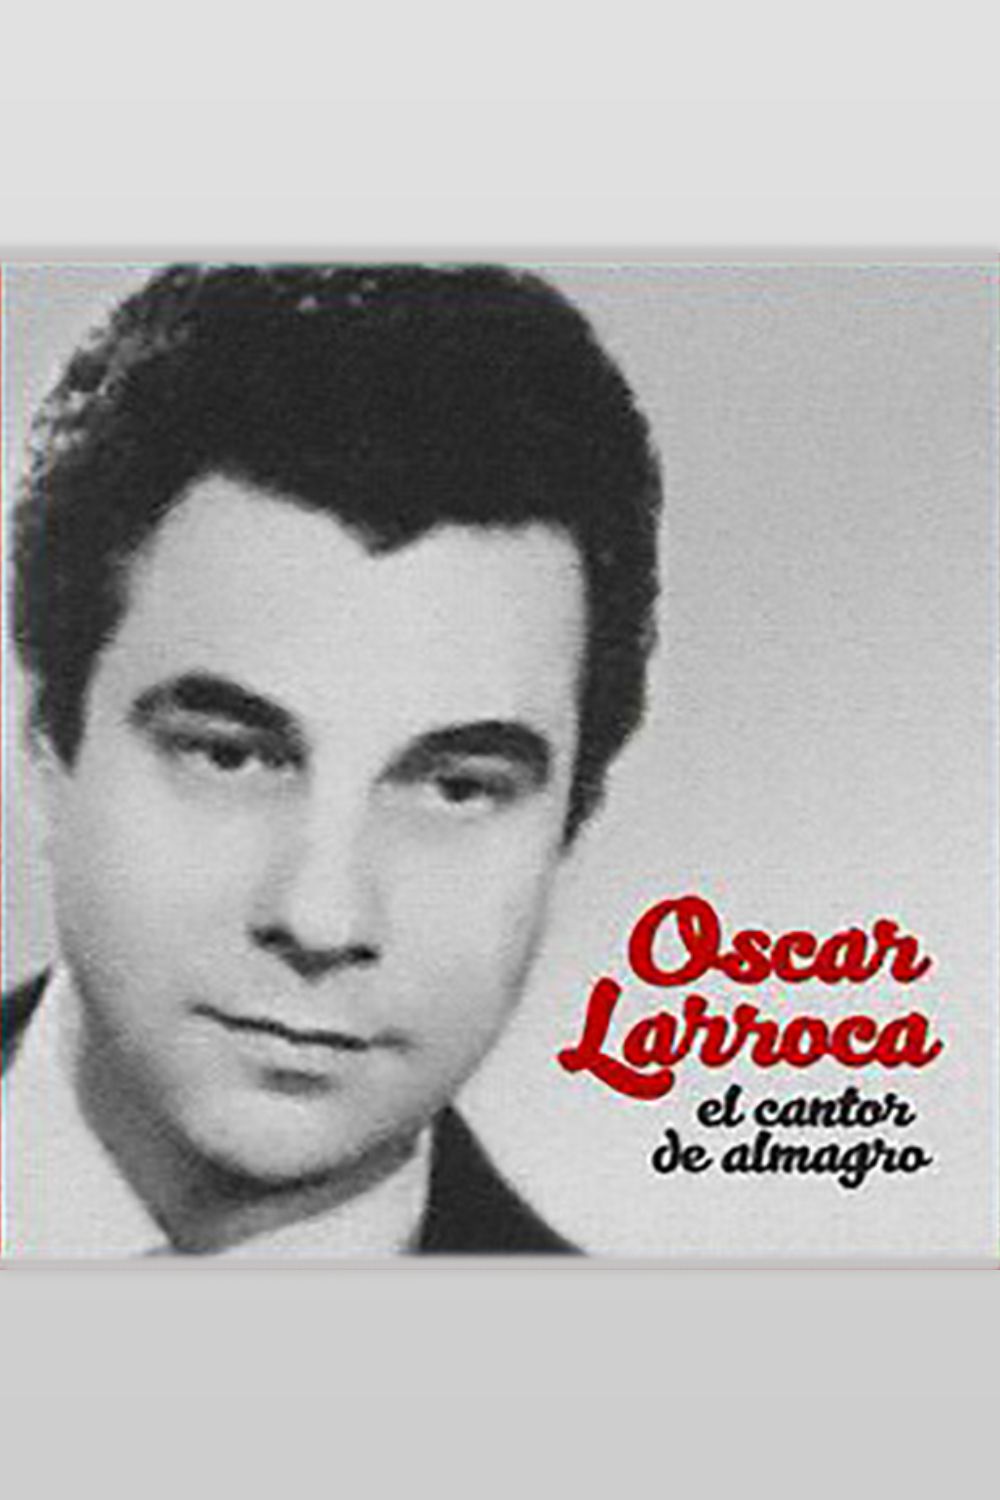 Oscar Larroca, Argentine Tango singer.